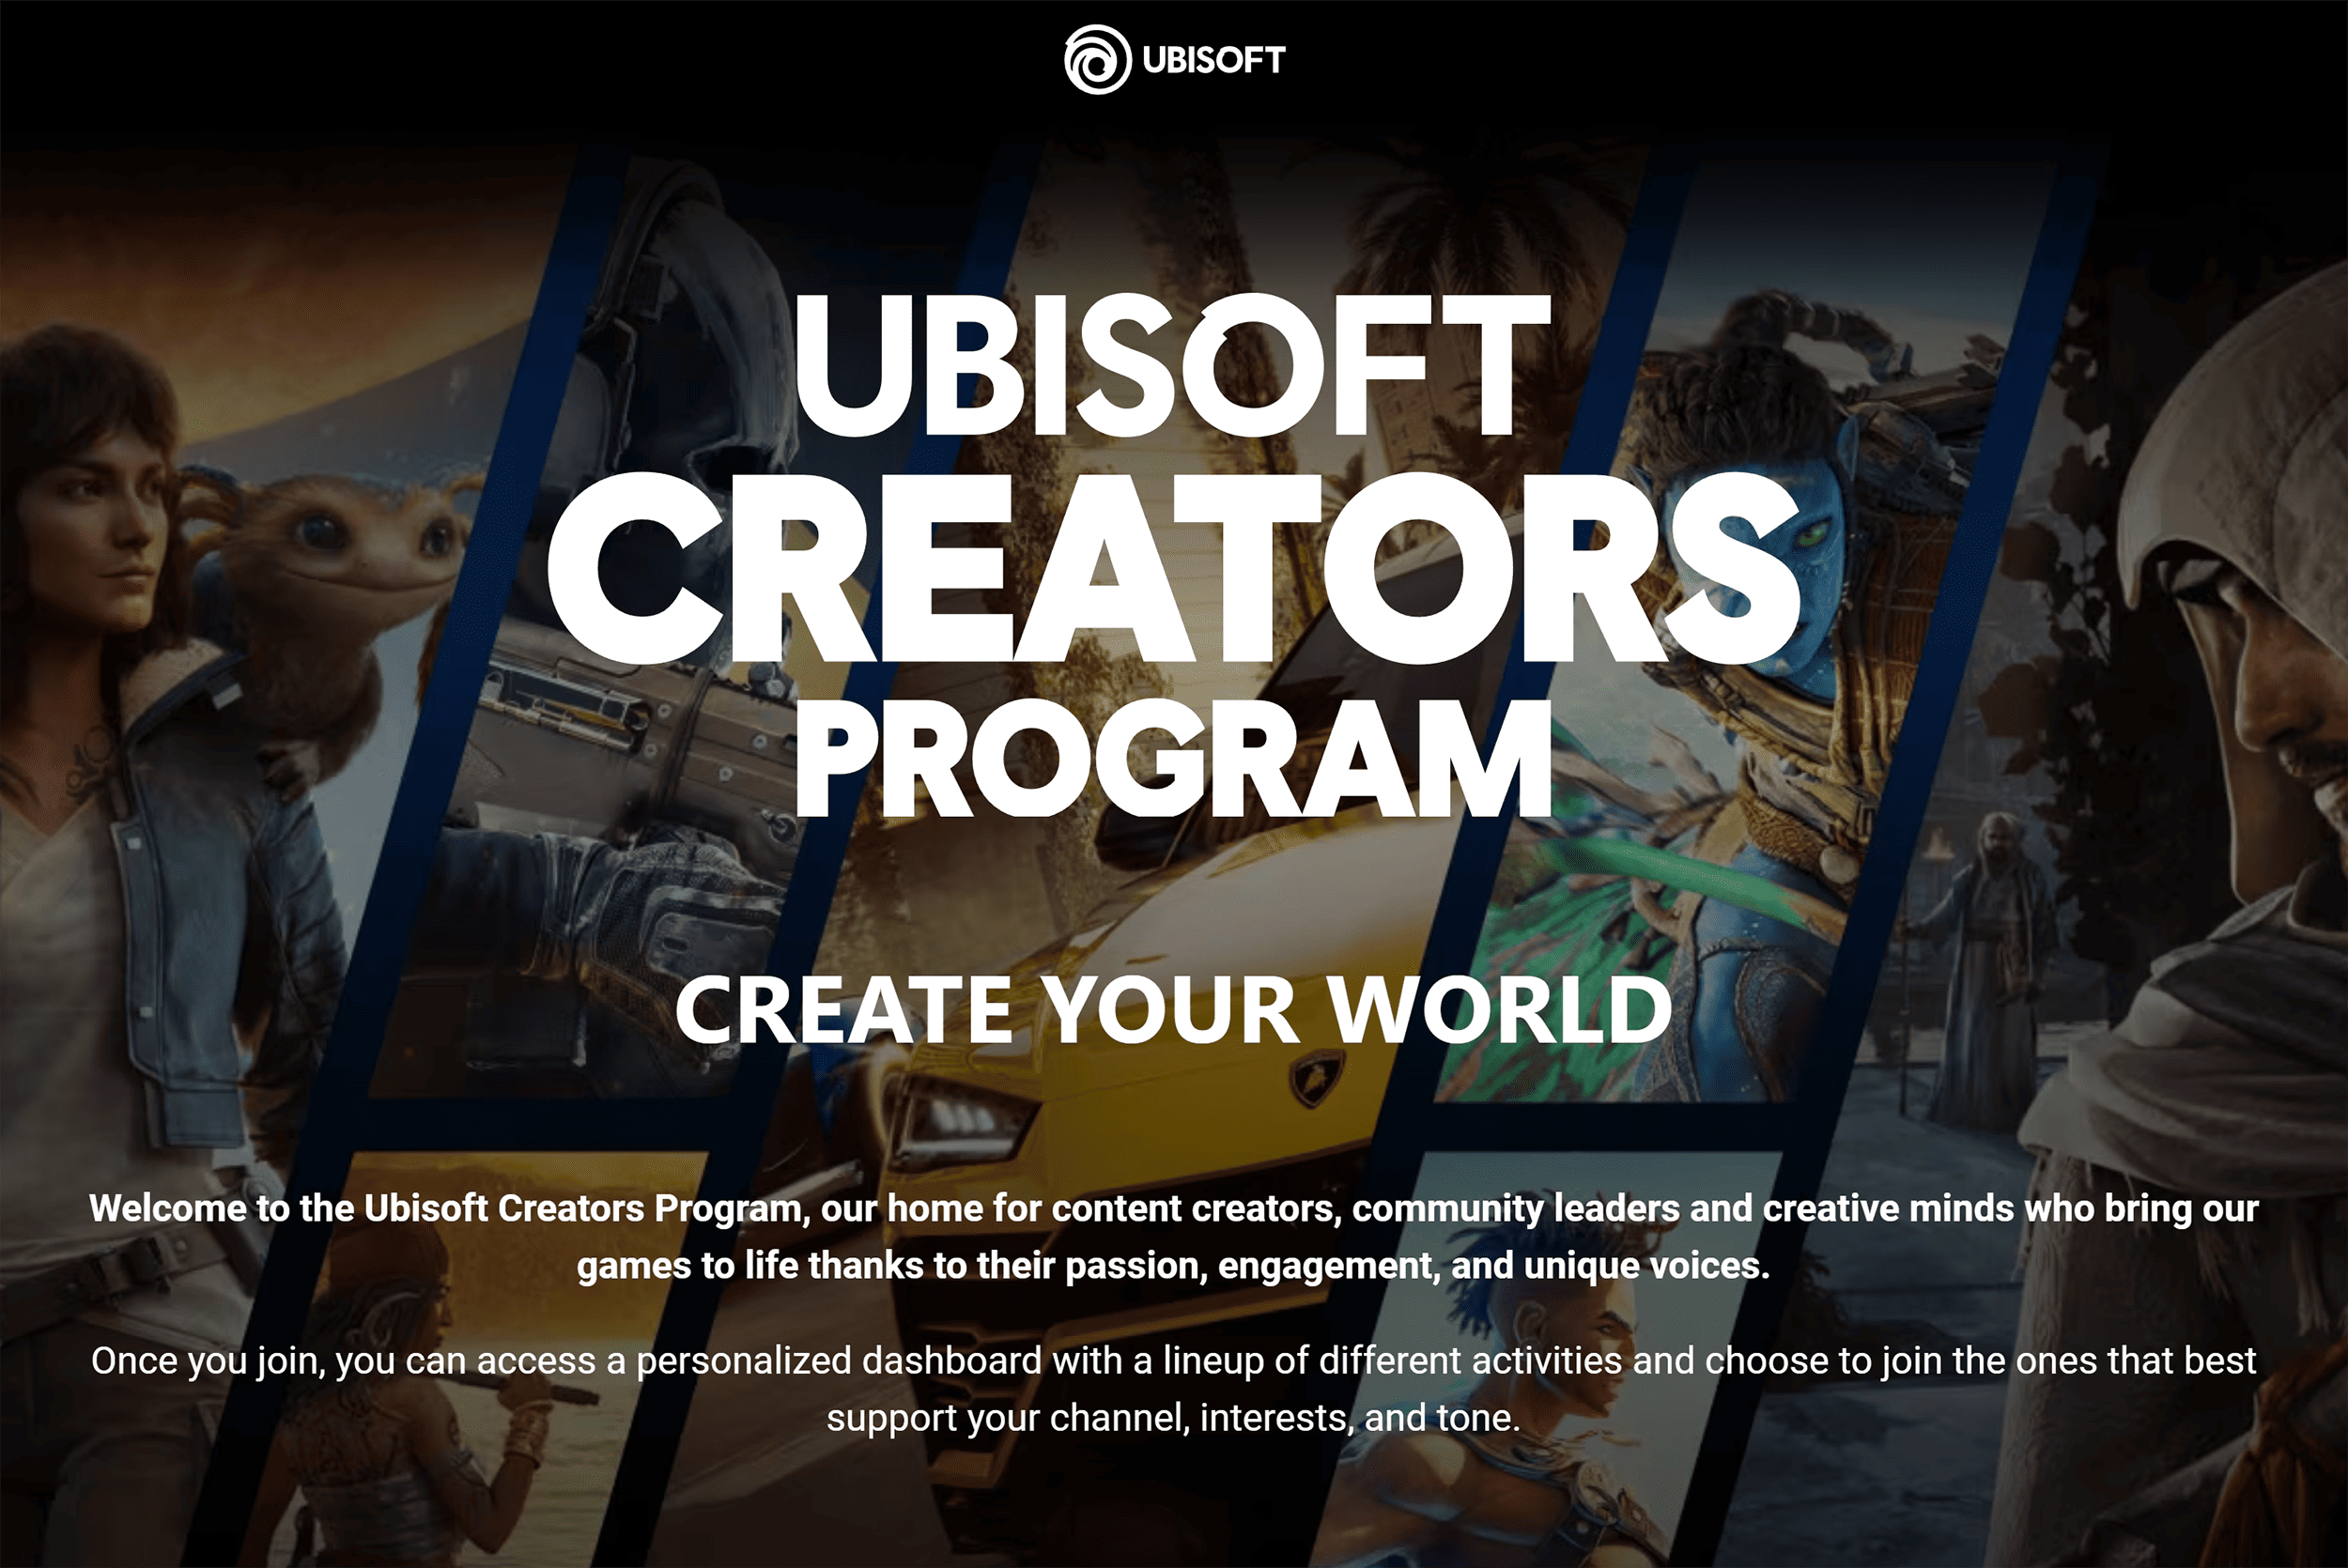 Ubisoft Creators Program